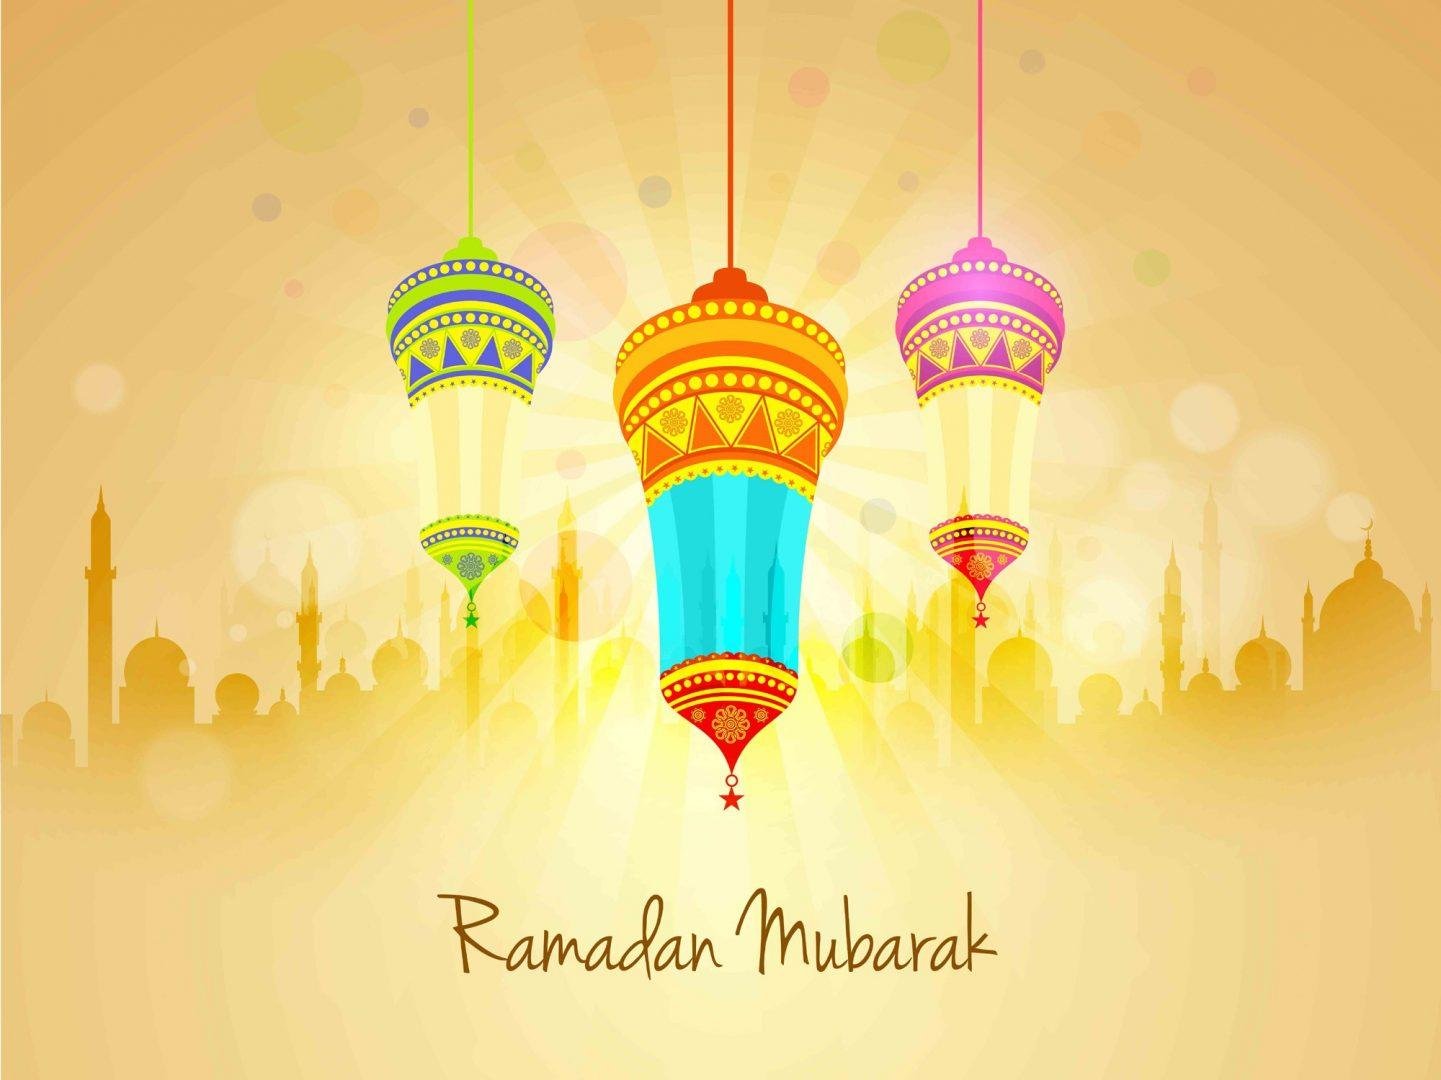 Ramadan Mubarak Picture 2020